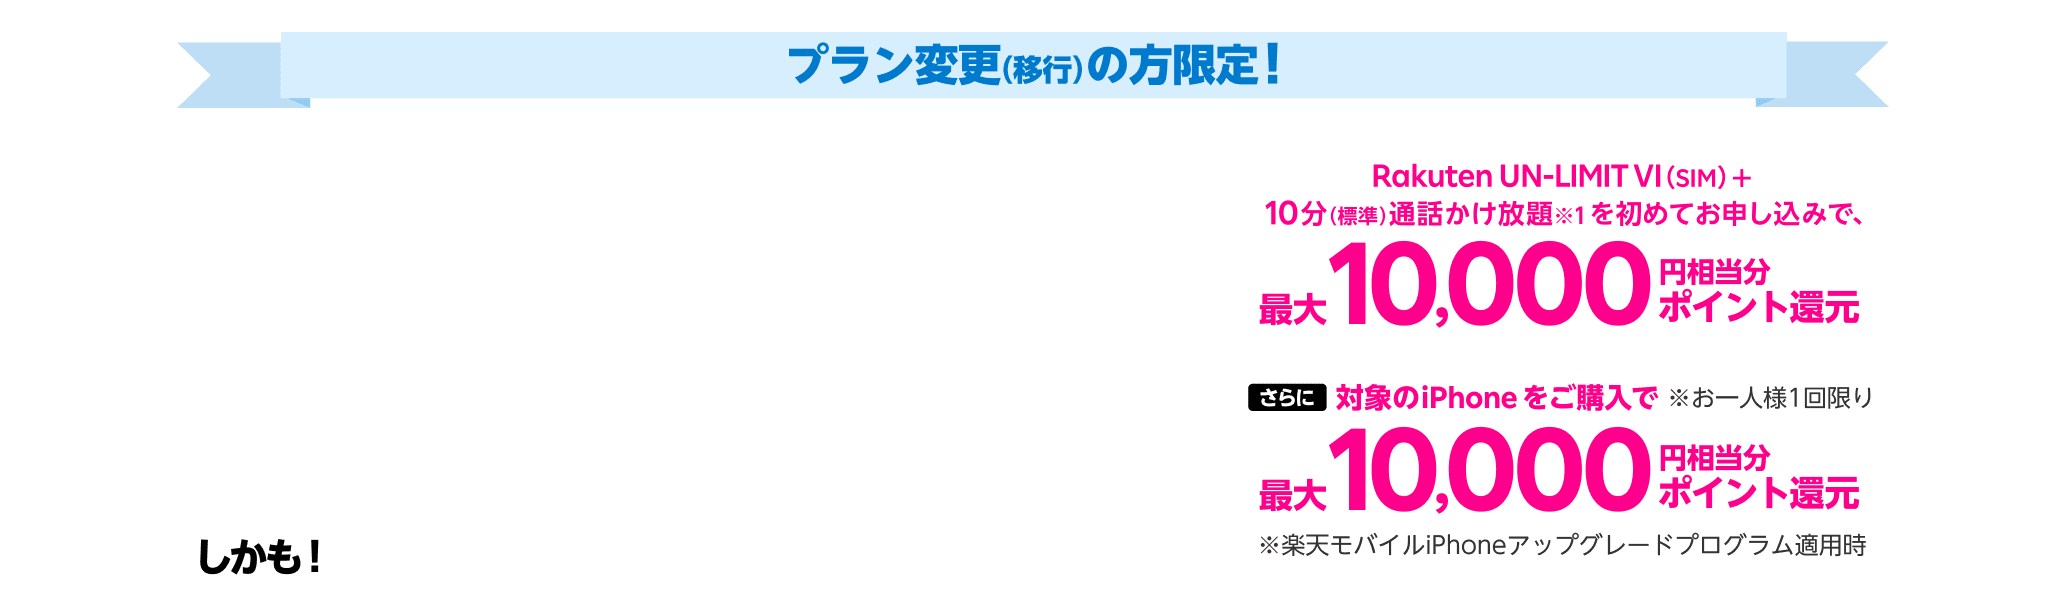 iPhone発売記念キャンペーン最大20,000円相当ポイント還元